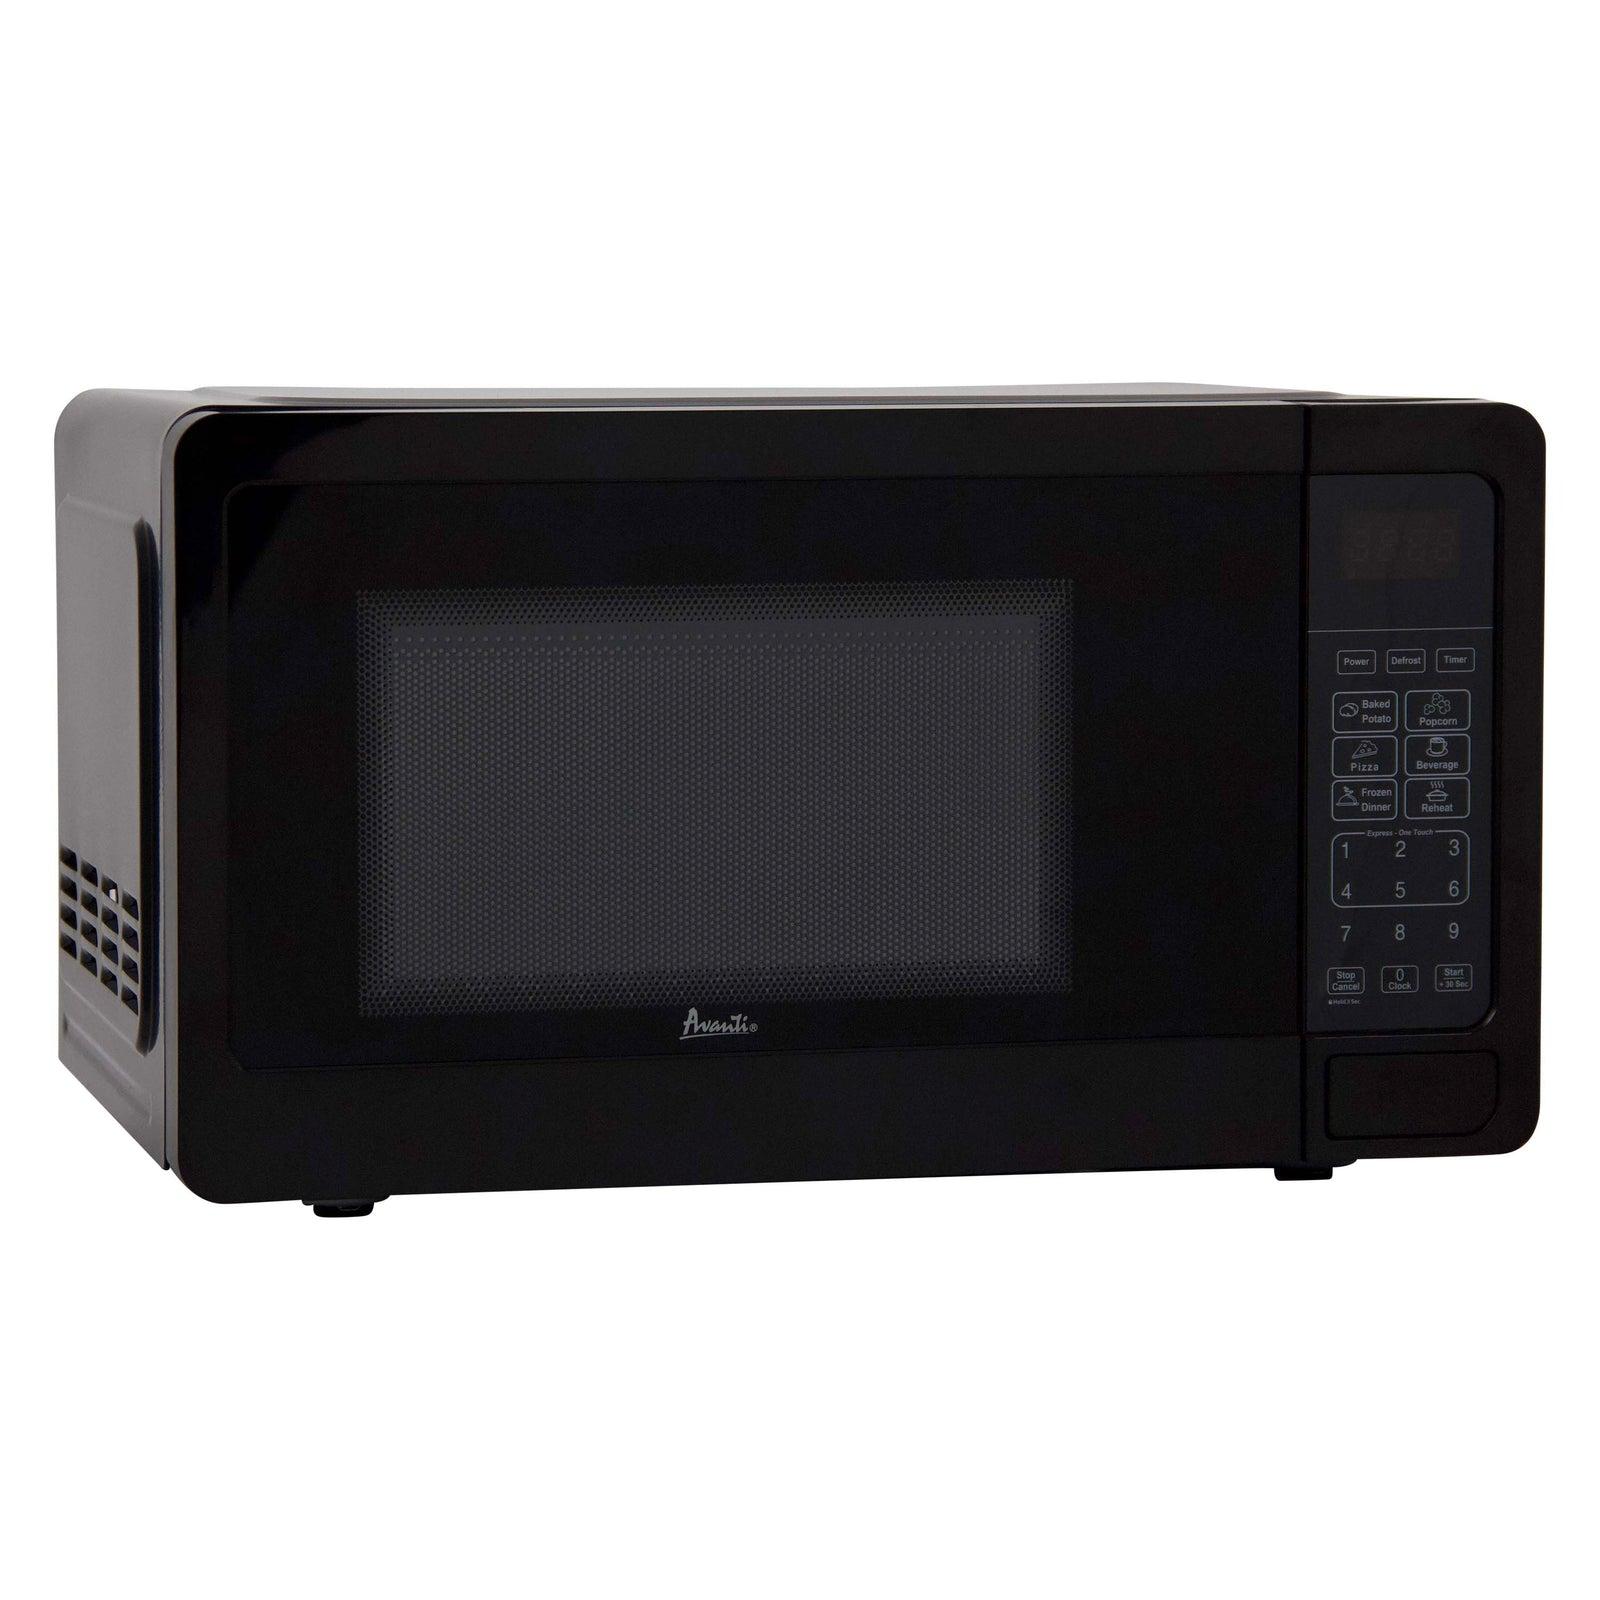 Avanti Countertop Microwave Oven, 0.7 cu. ft. - White / 0.7 cu. ft.